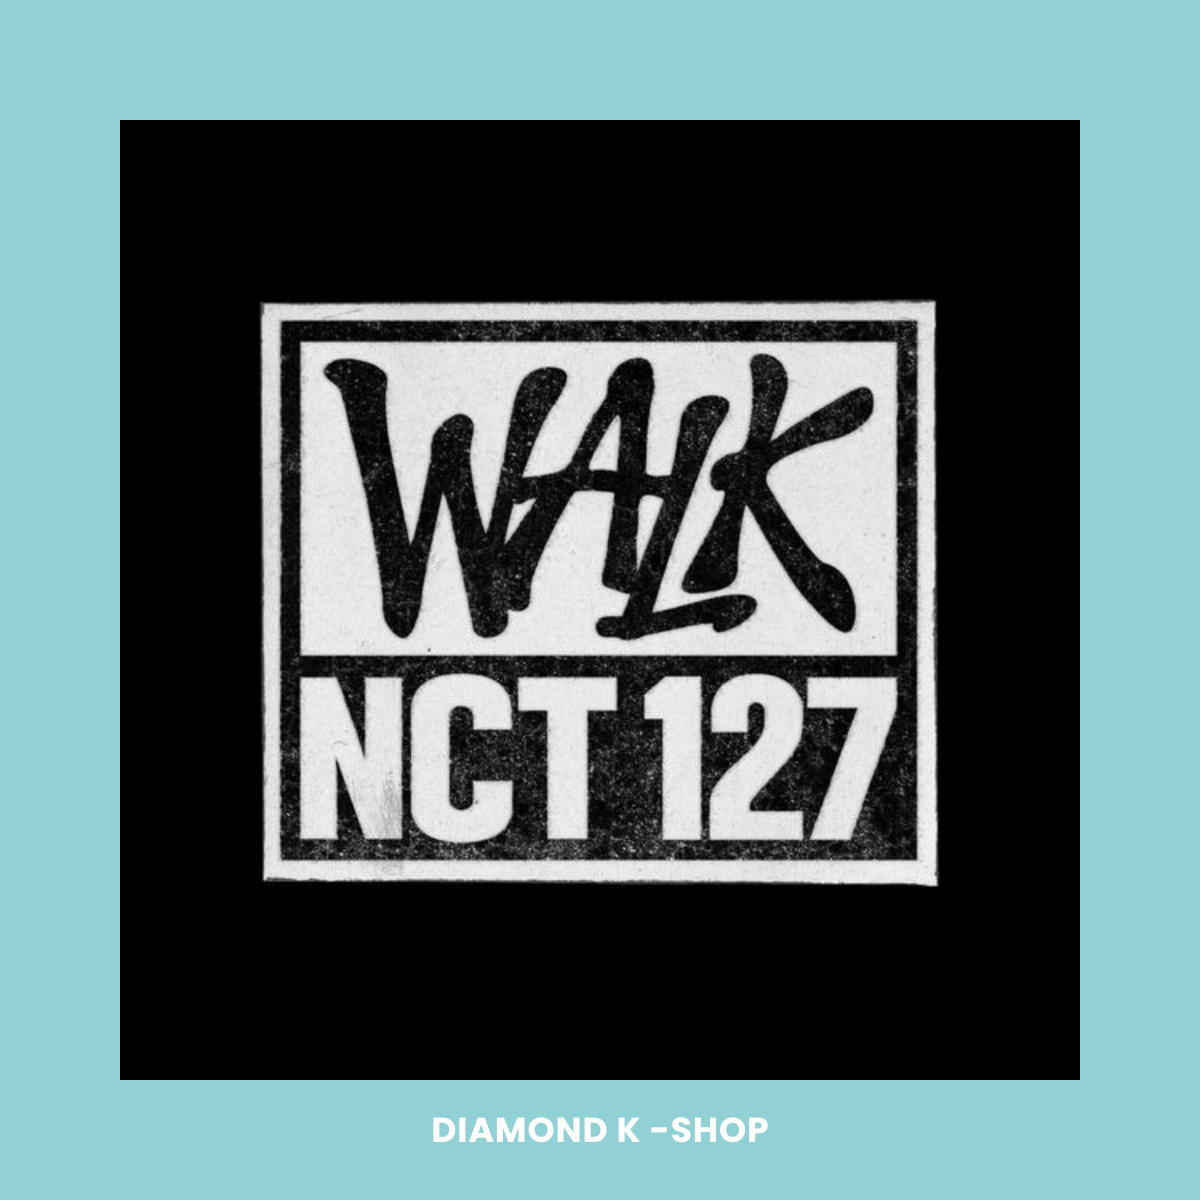 NCT 127 - Walk (Walk Crew Character Card)